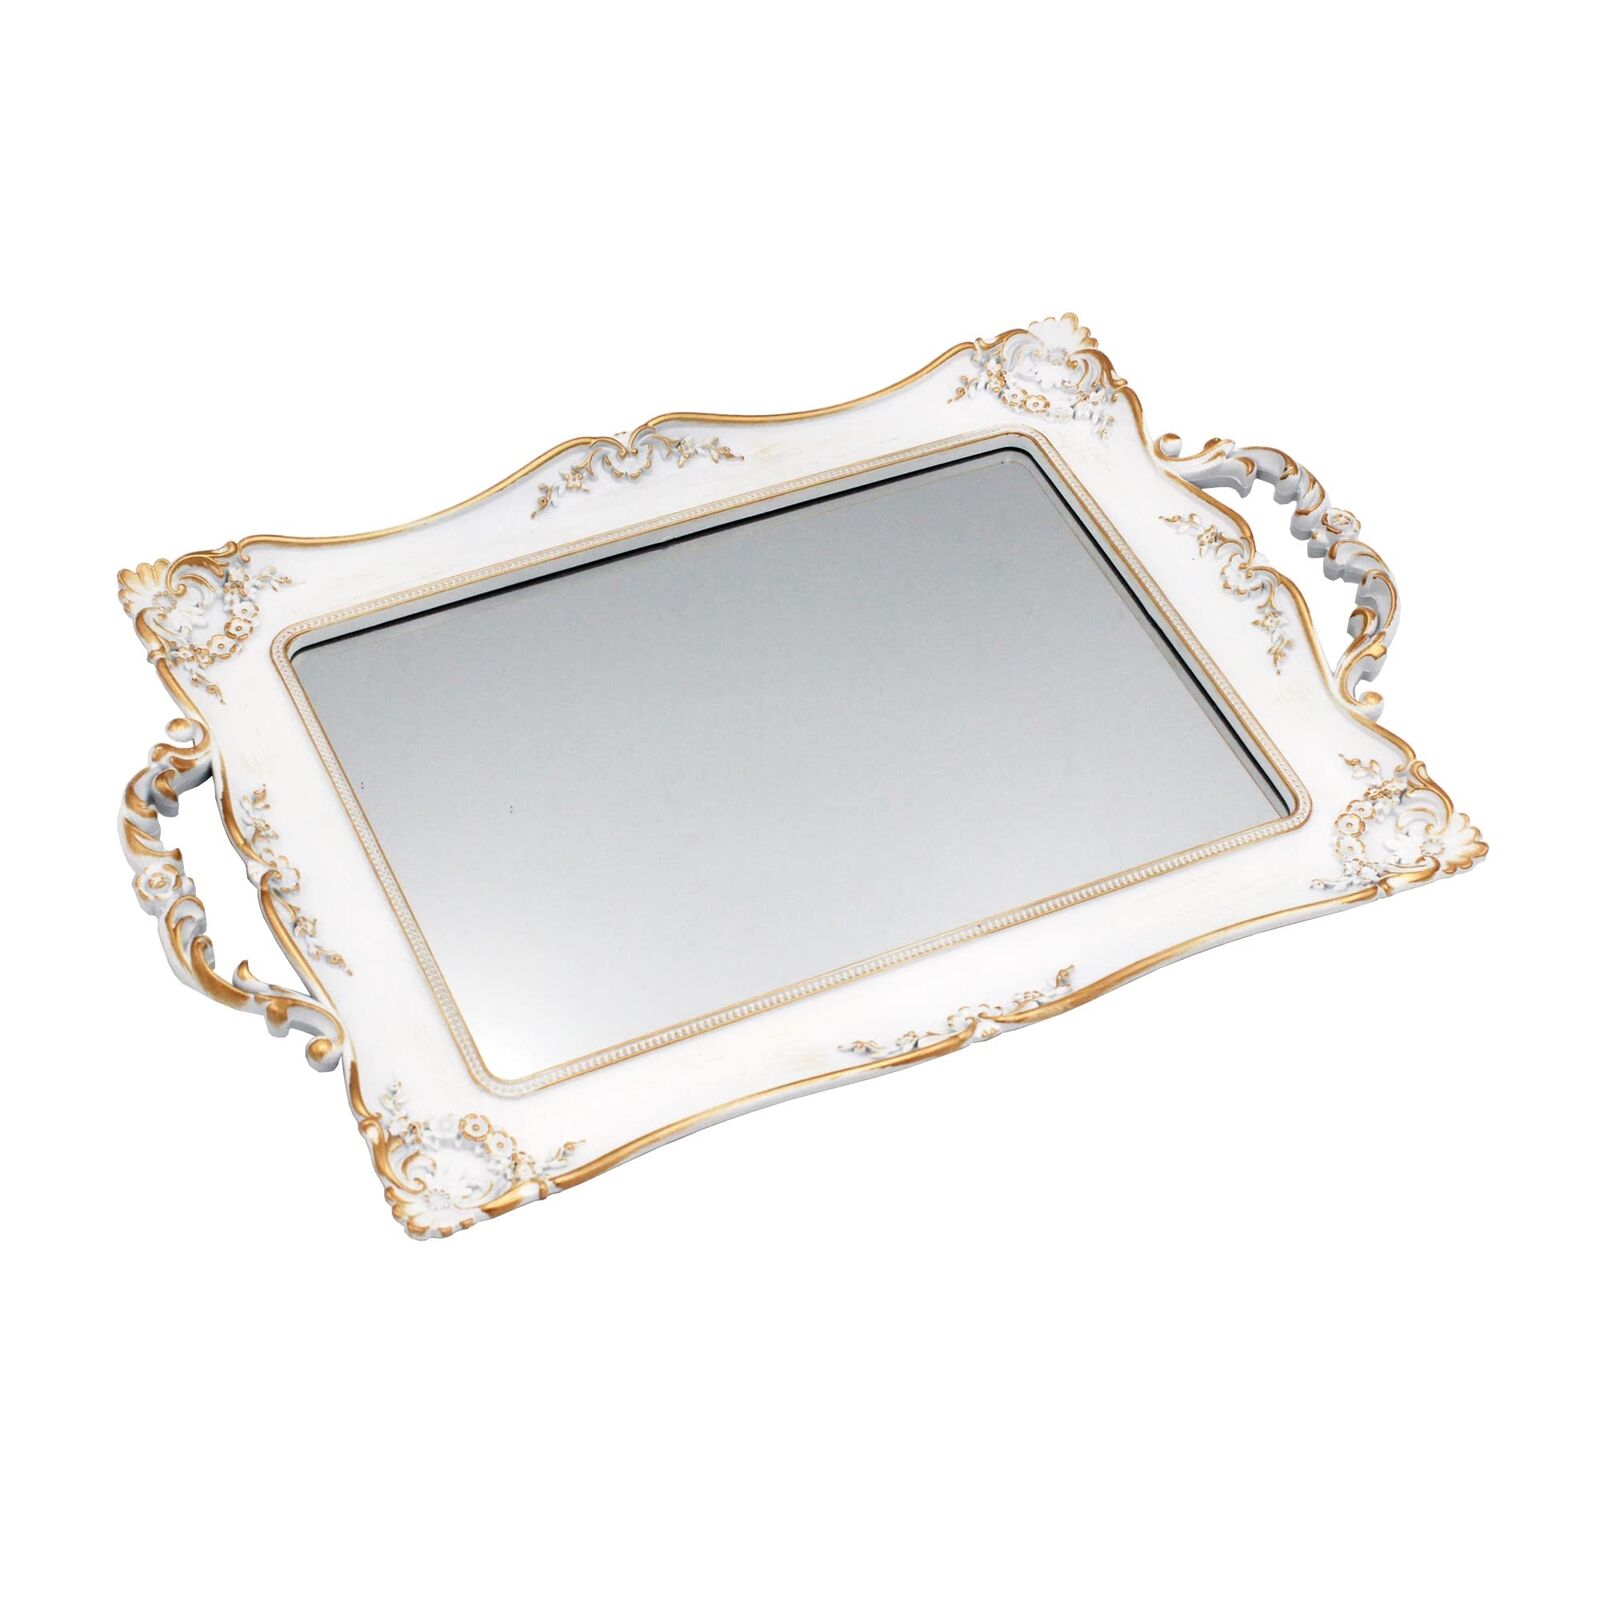 Tstarer Antique Decorative Gold Framed Square Mirror Tray Jewelry & Cosmetics O